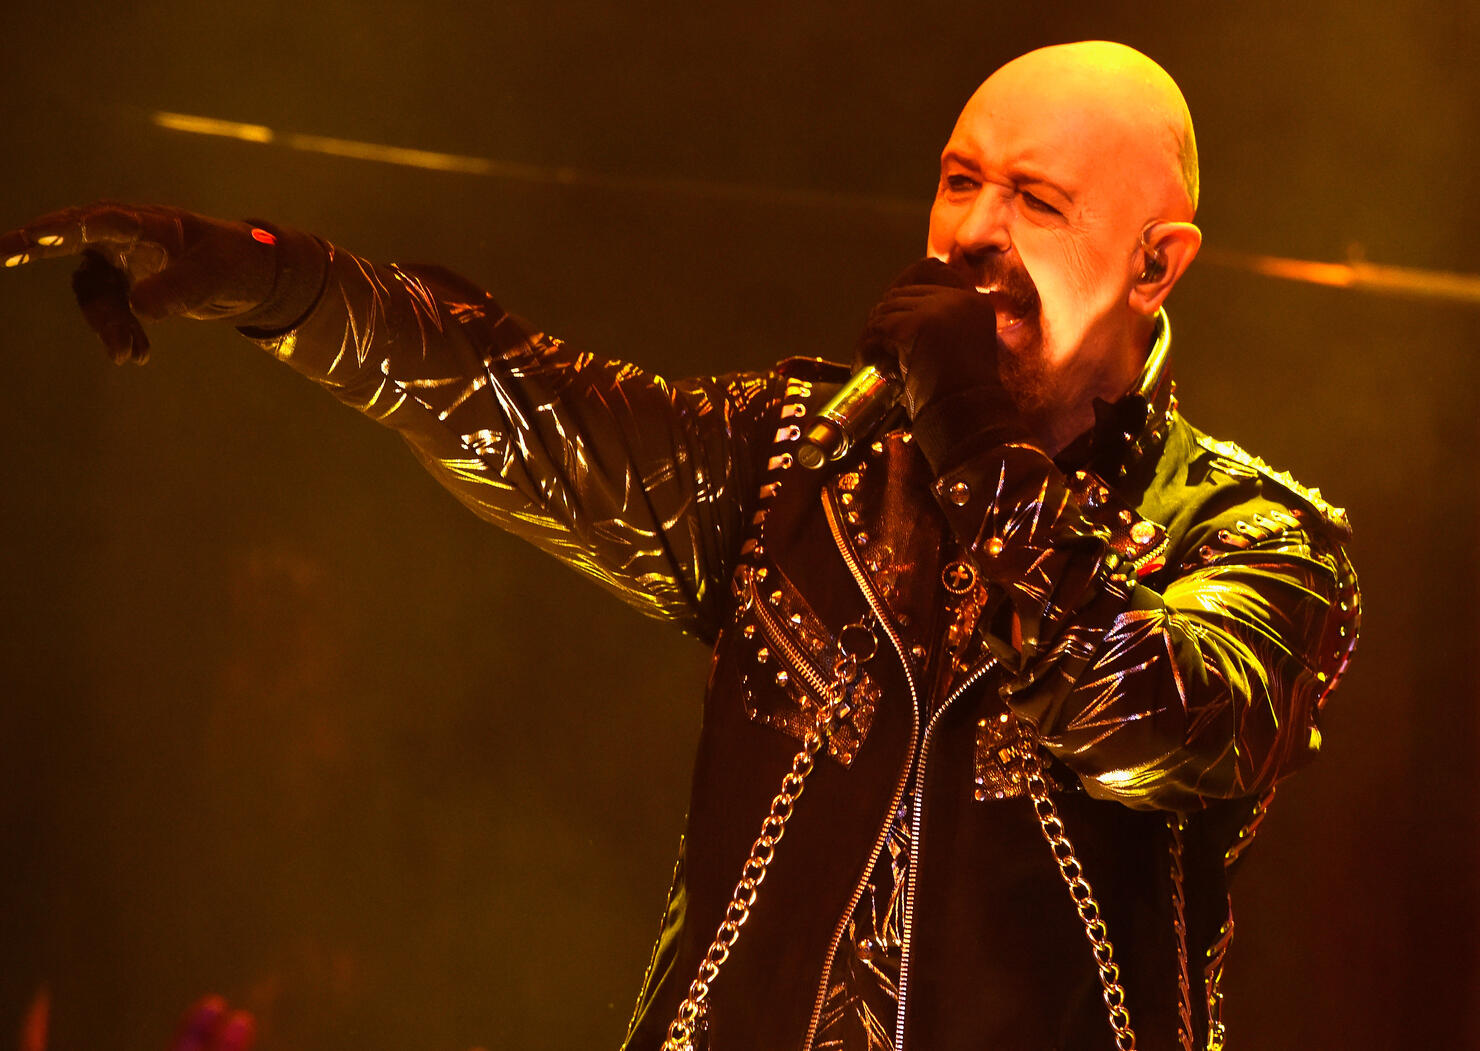 Judas Priest Perform At The Nokia Theatre L.A. Live